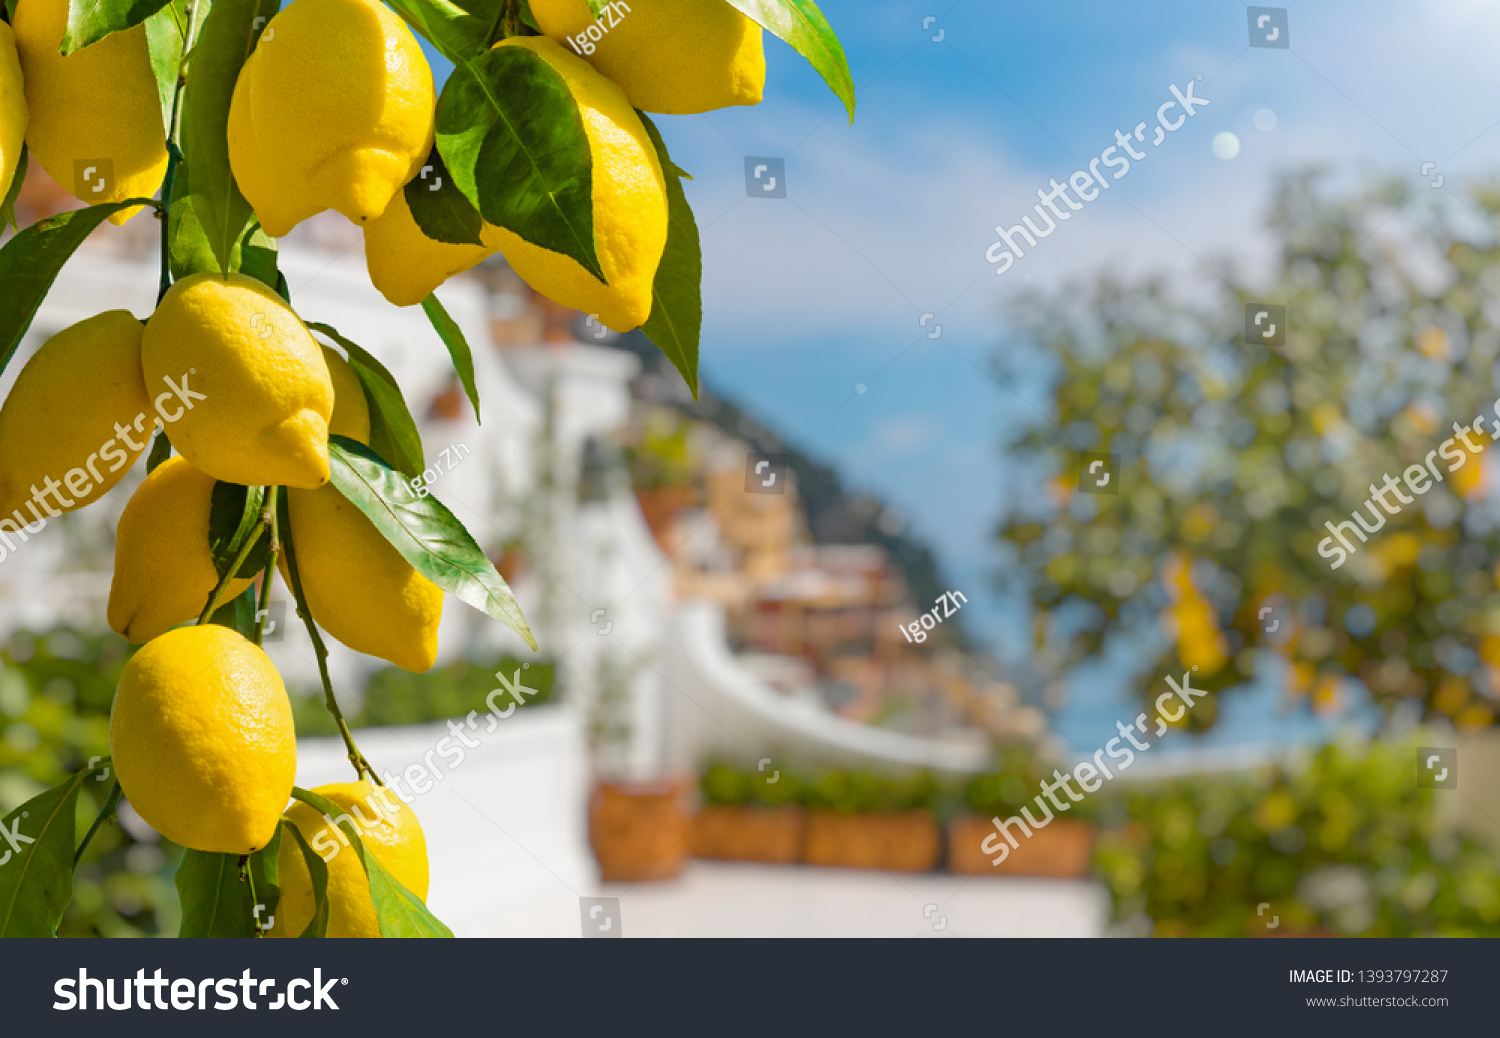 Lemon garden in Italian Amalfi coast ready for harvest. Bunches of fresh yellow ripe lemons with green leaves. #1393797287